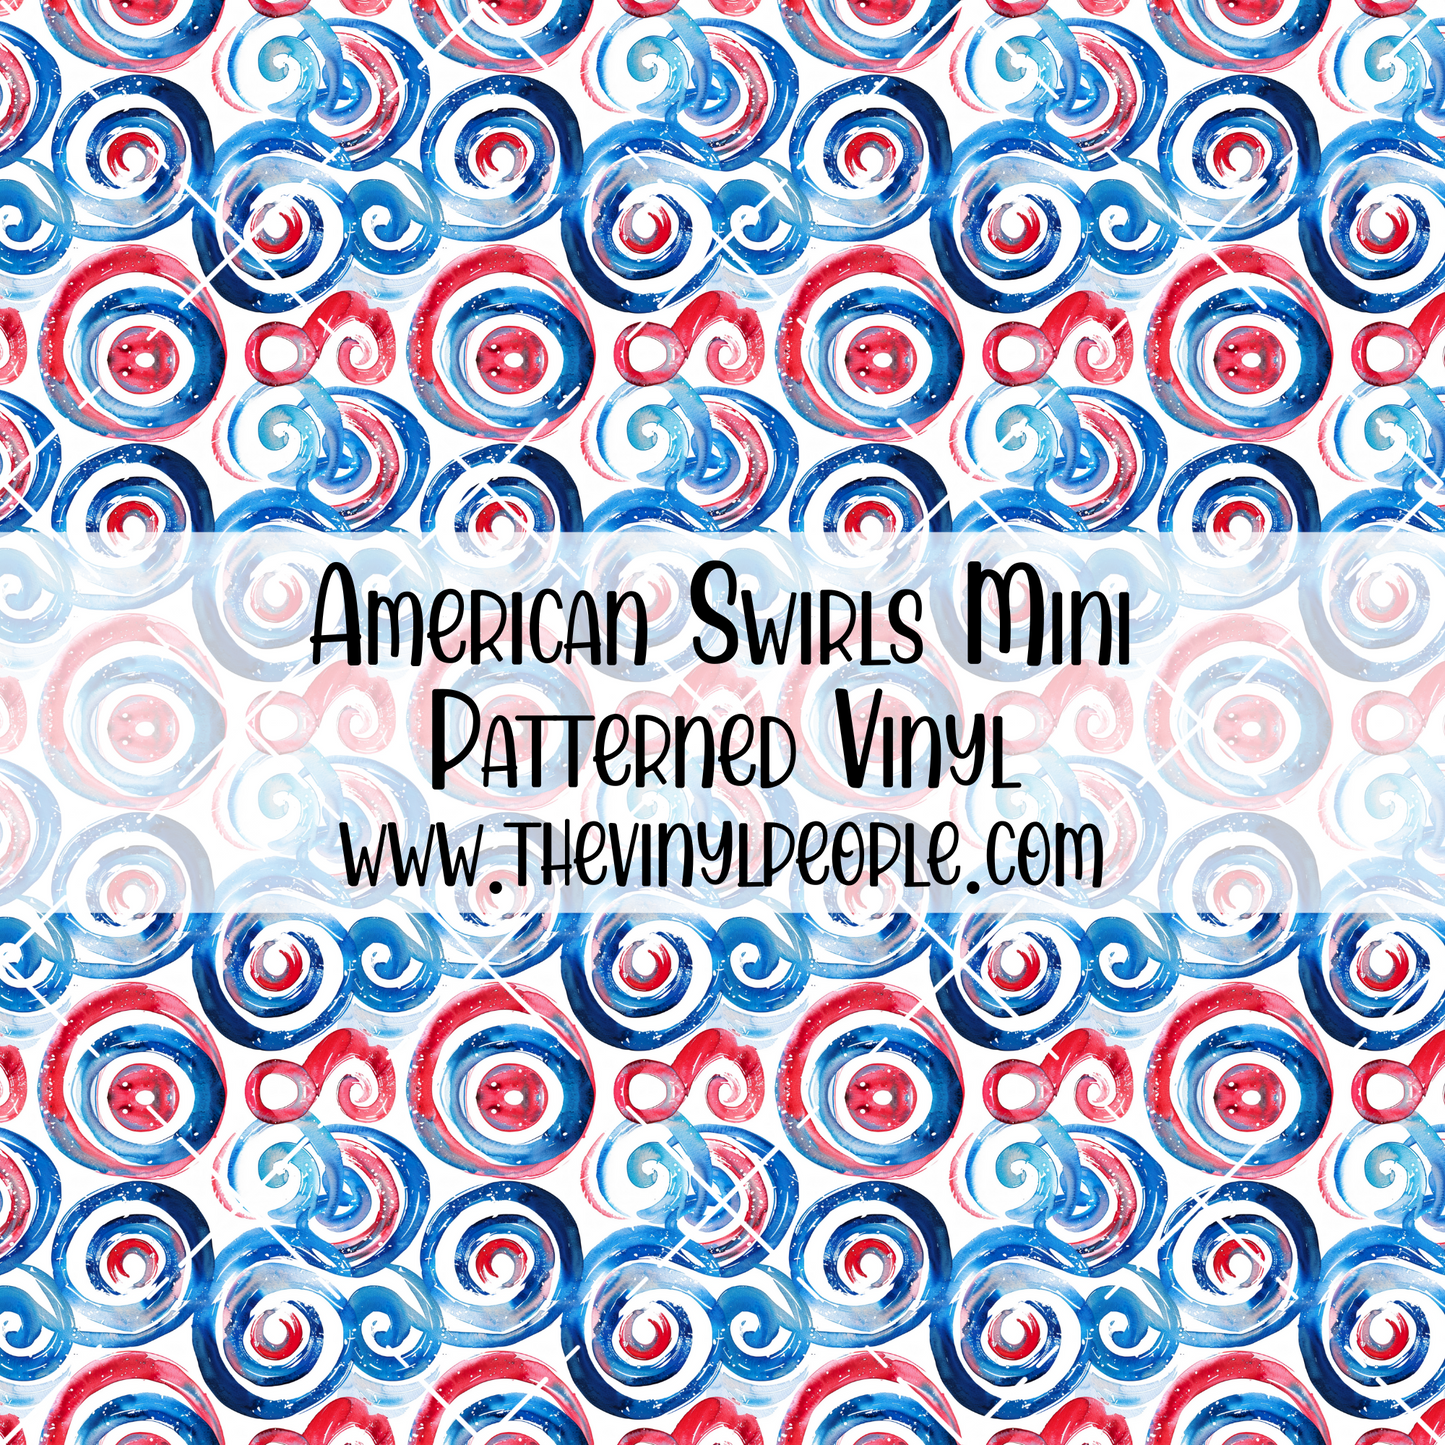 American Swirls Patterned Vinyl